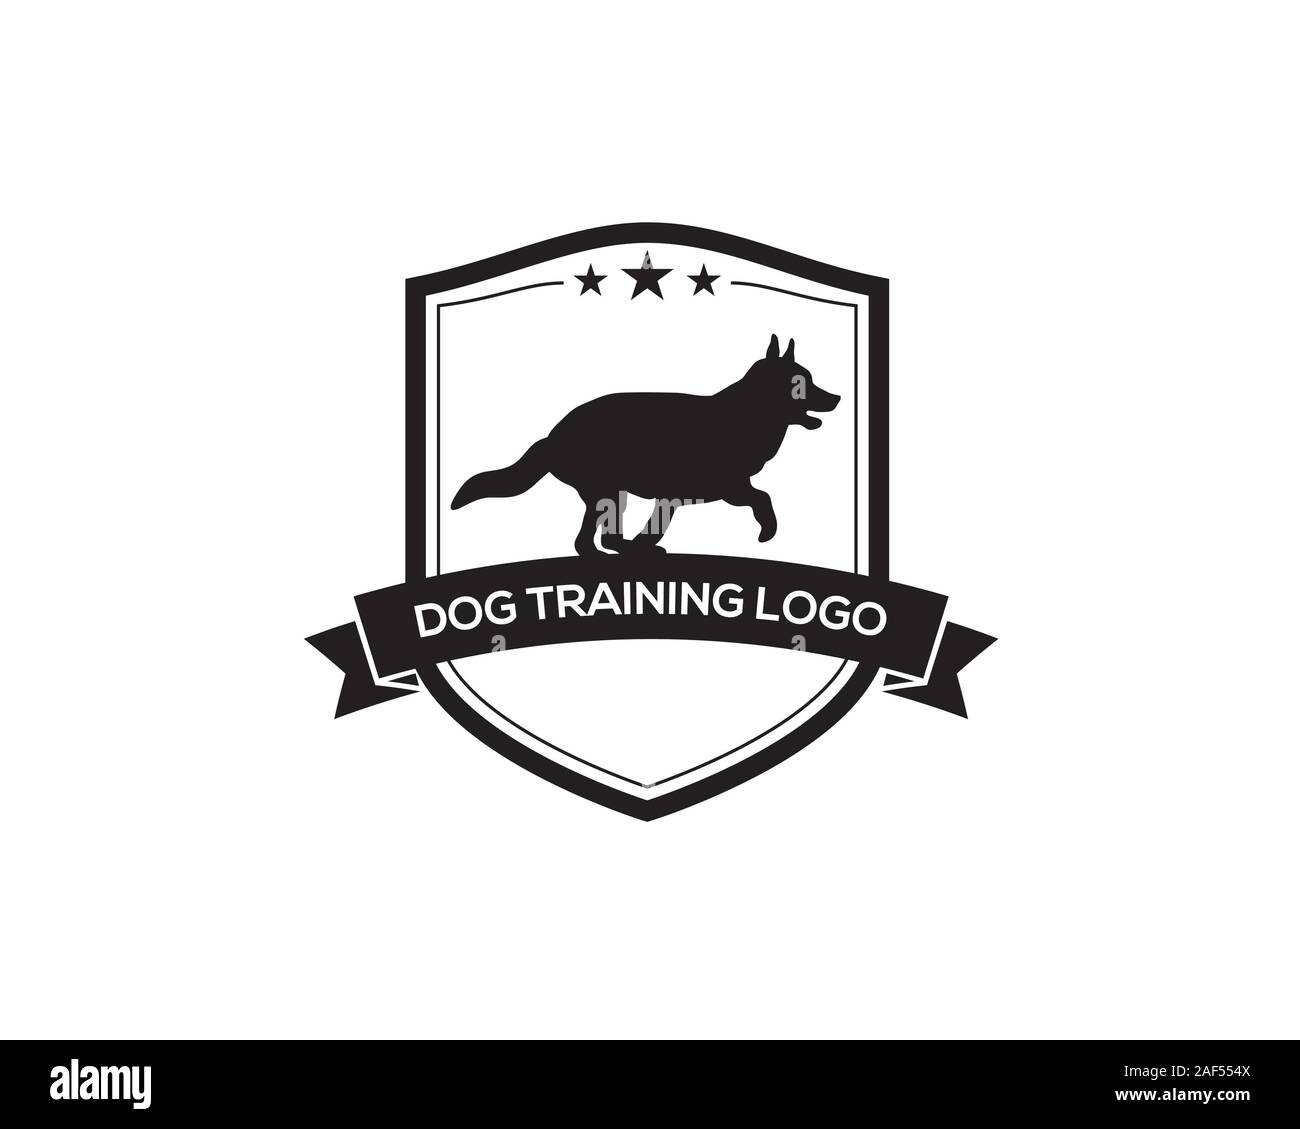 k9 dog training center logo Stock Vector